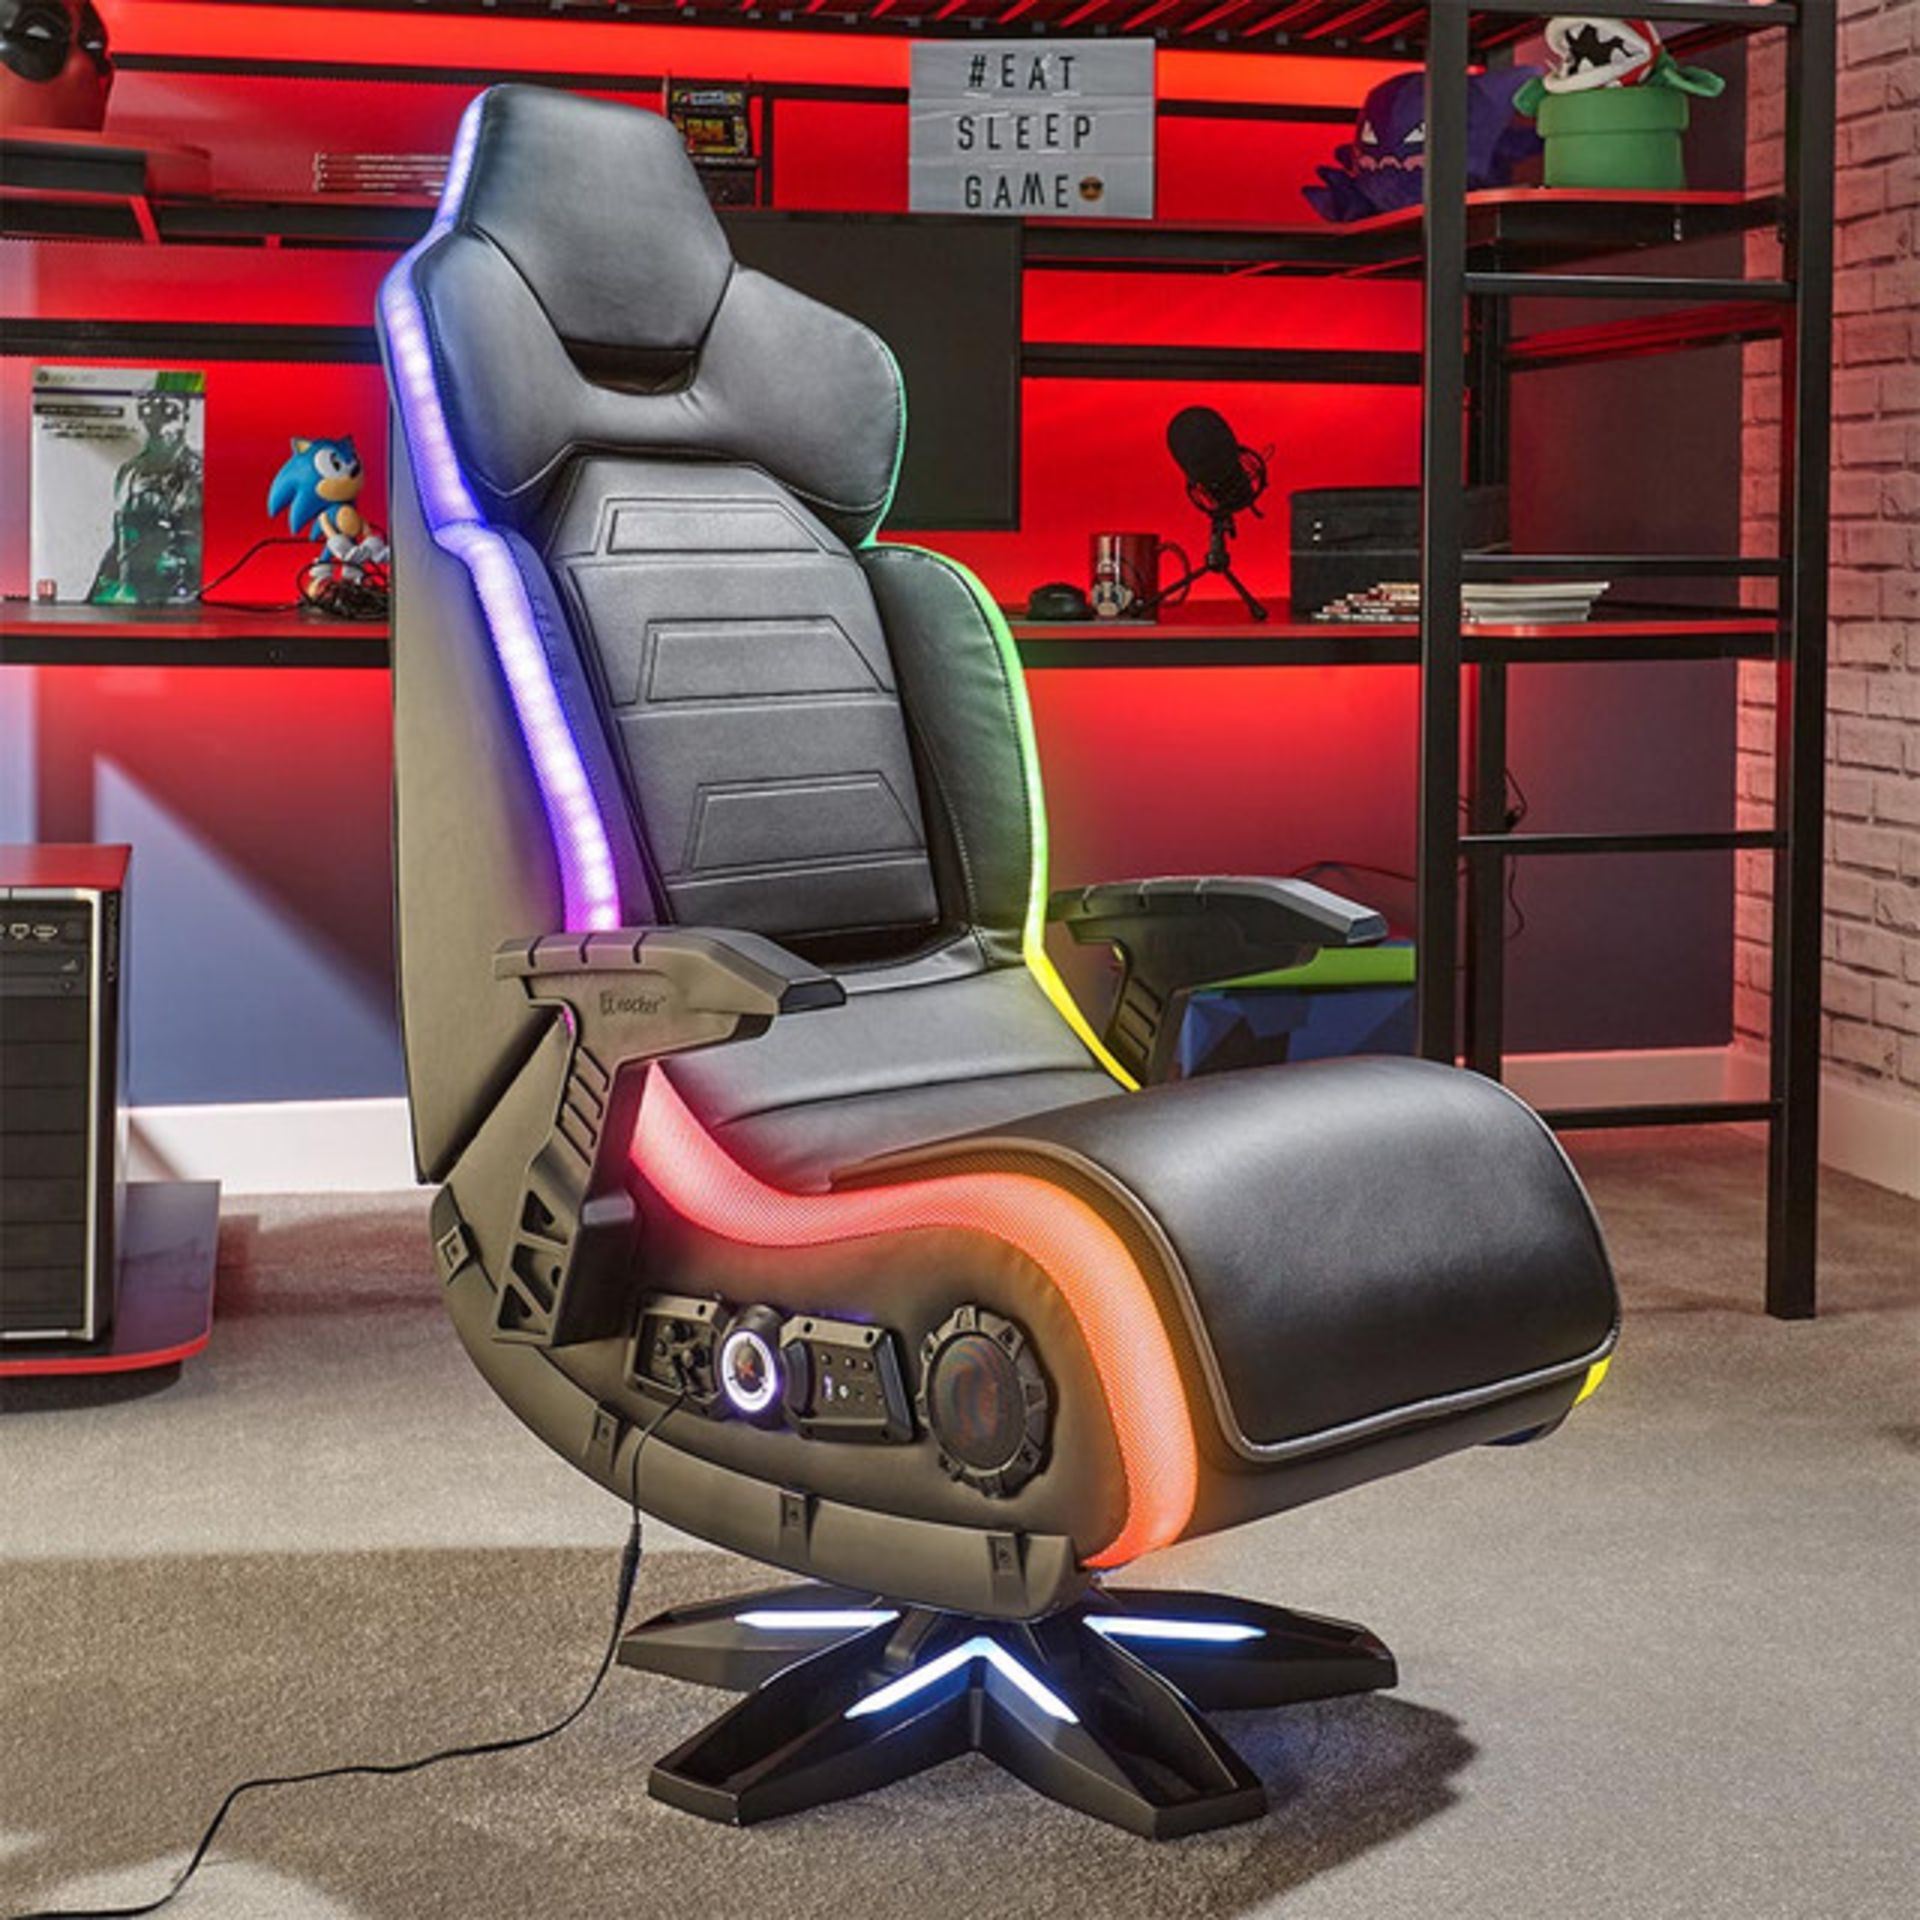 Title: (33/R3) RRP £350X Rocker Evo Elite RGB 4.1 Wireless Gaming Chair With LED Lights(84x 85x